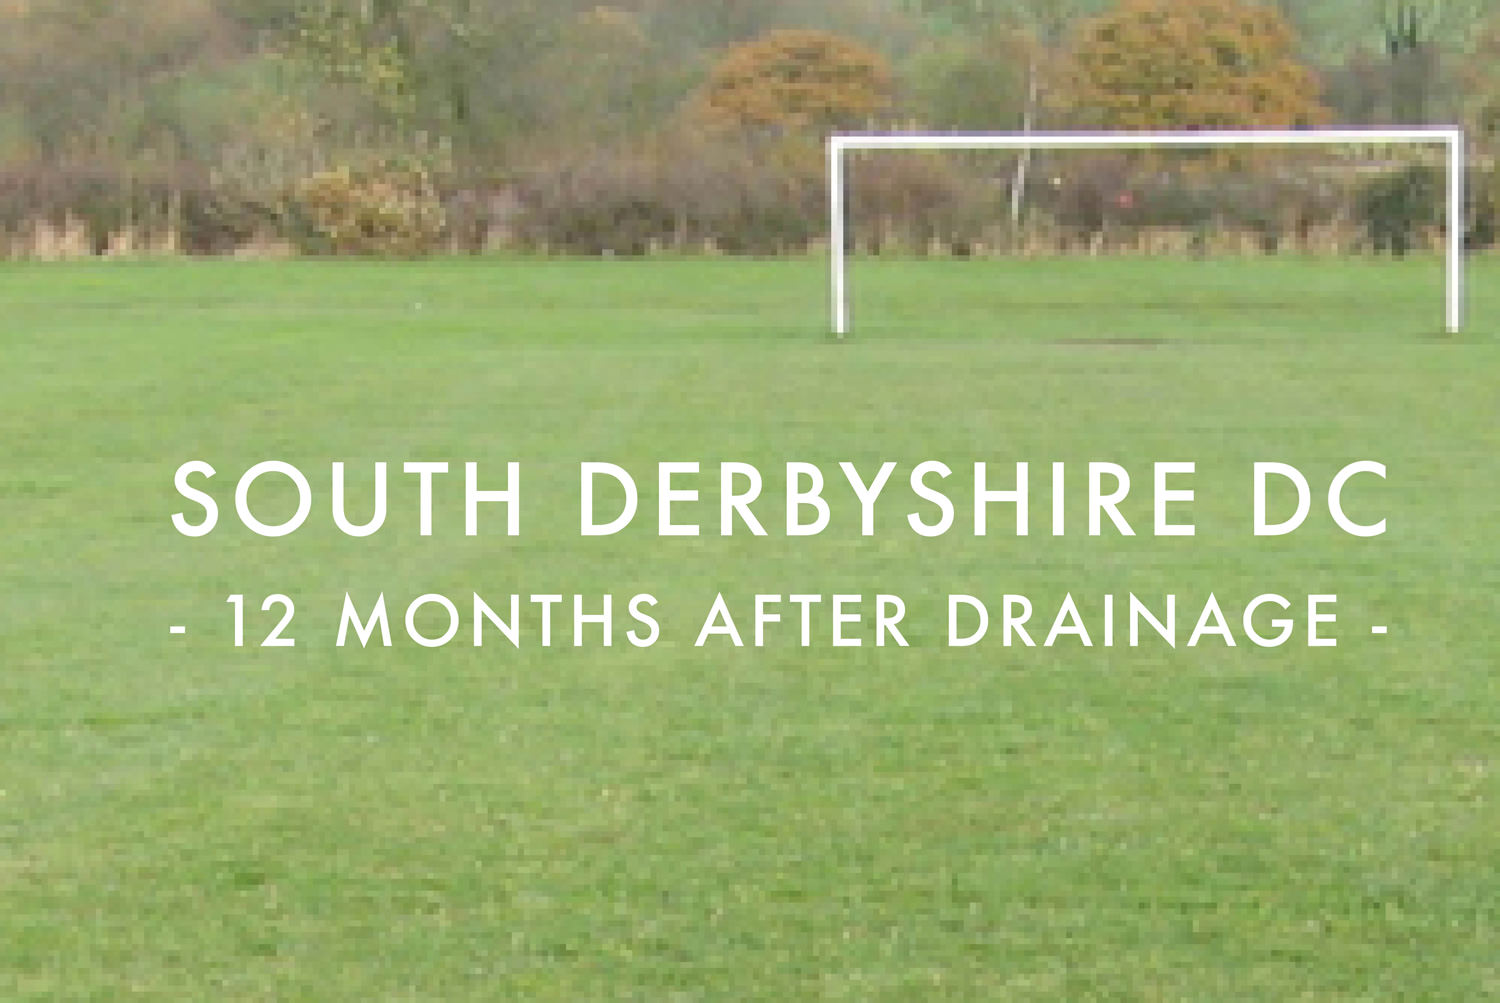 South Derbyshire DC - After Drainage